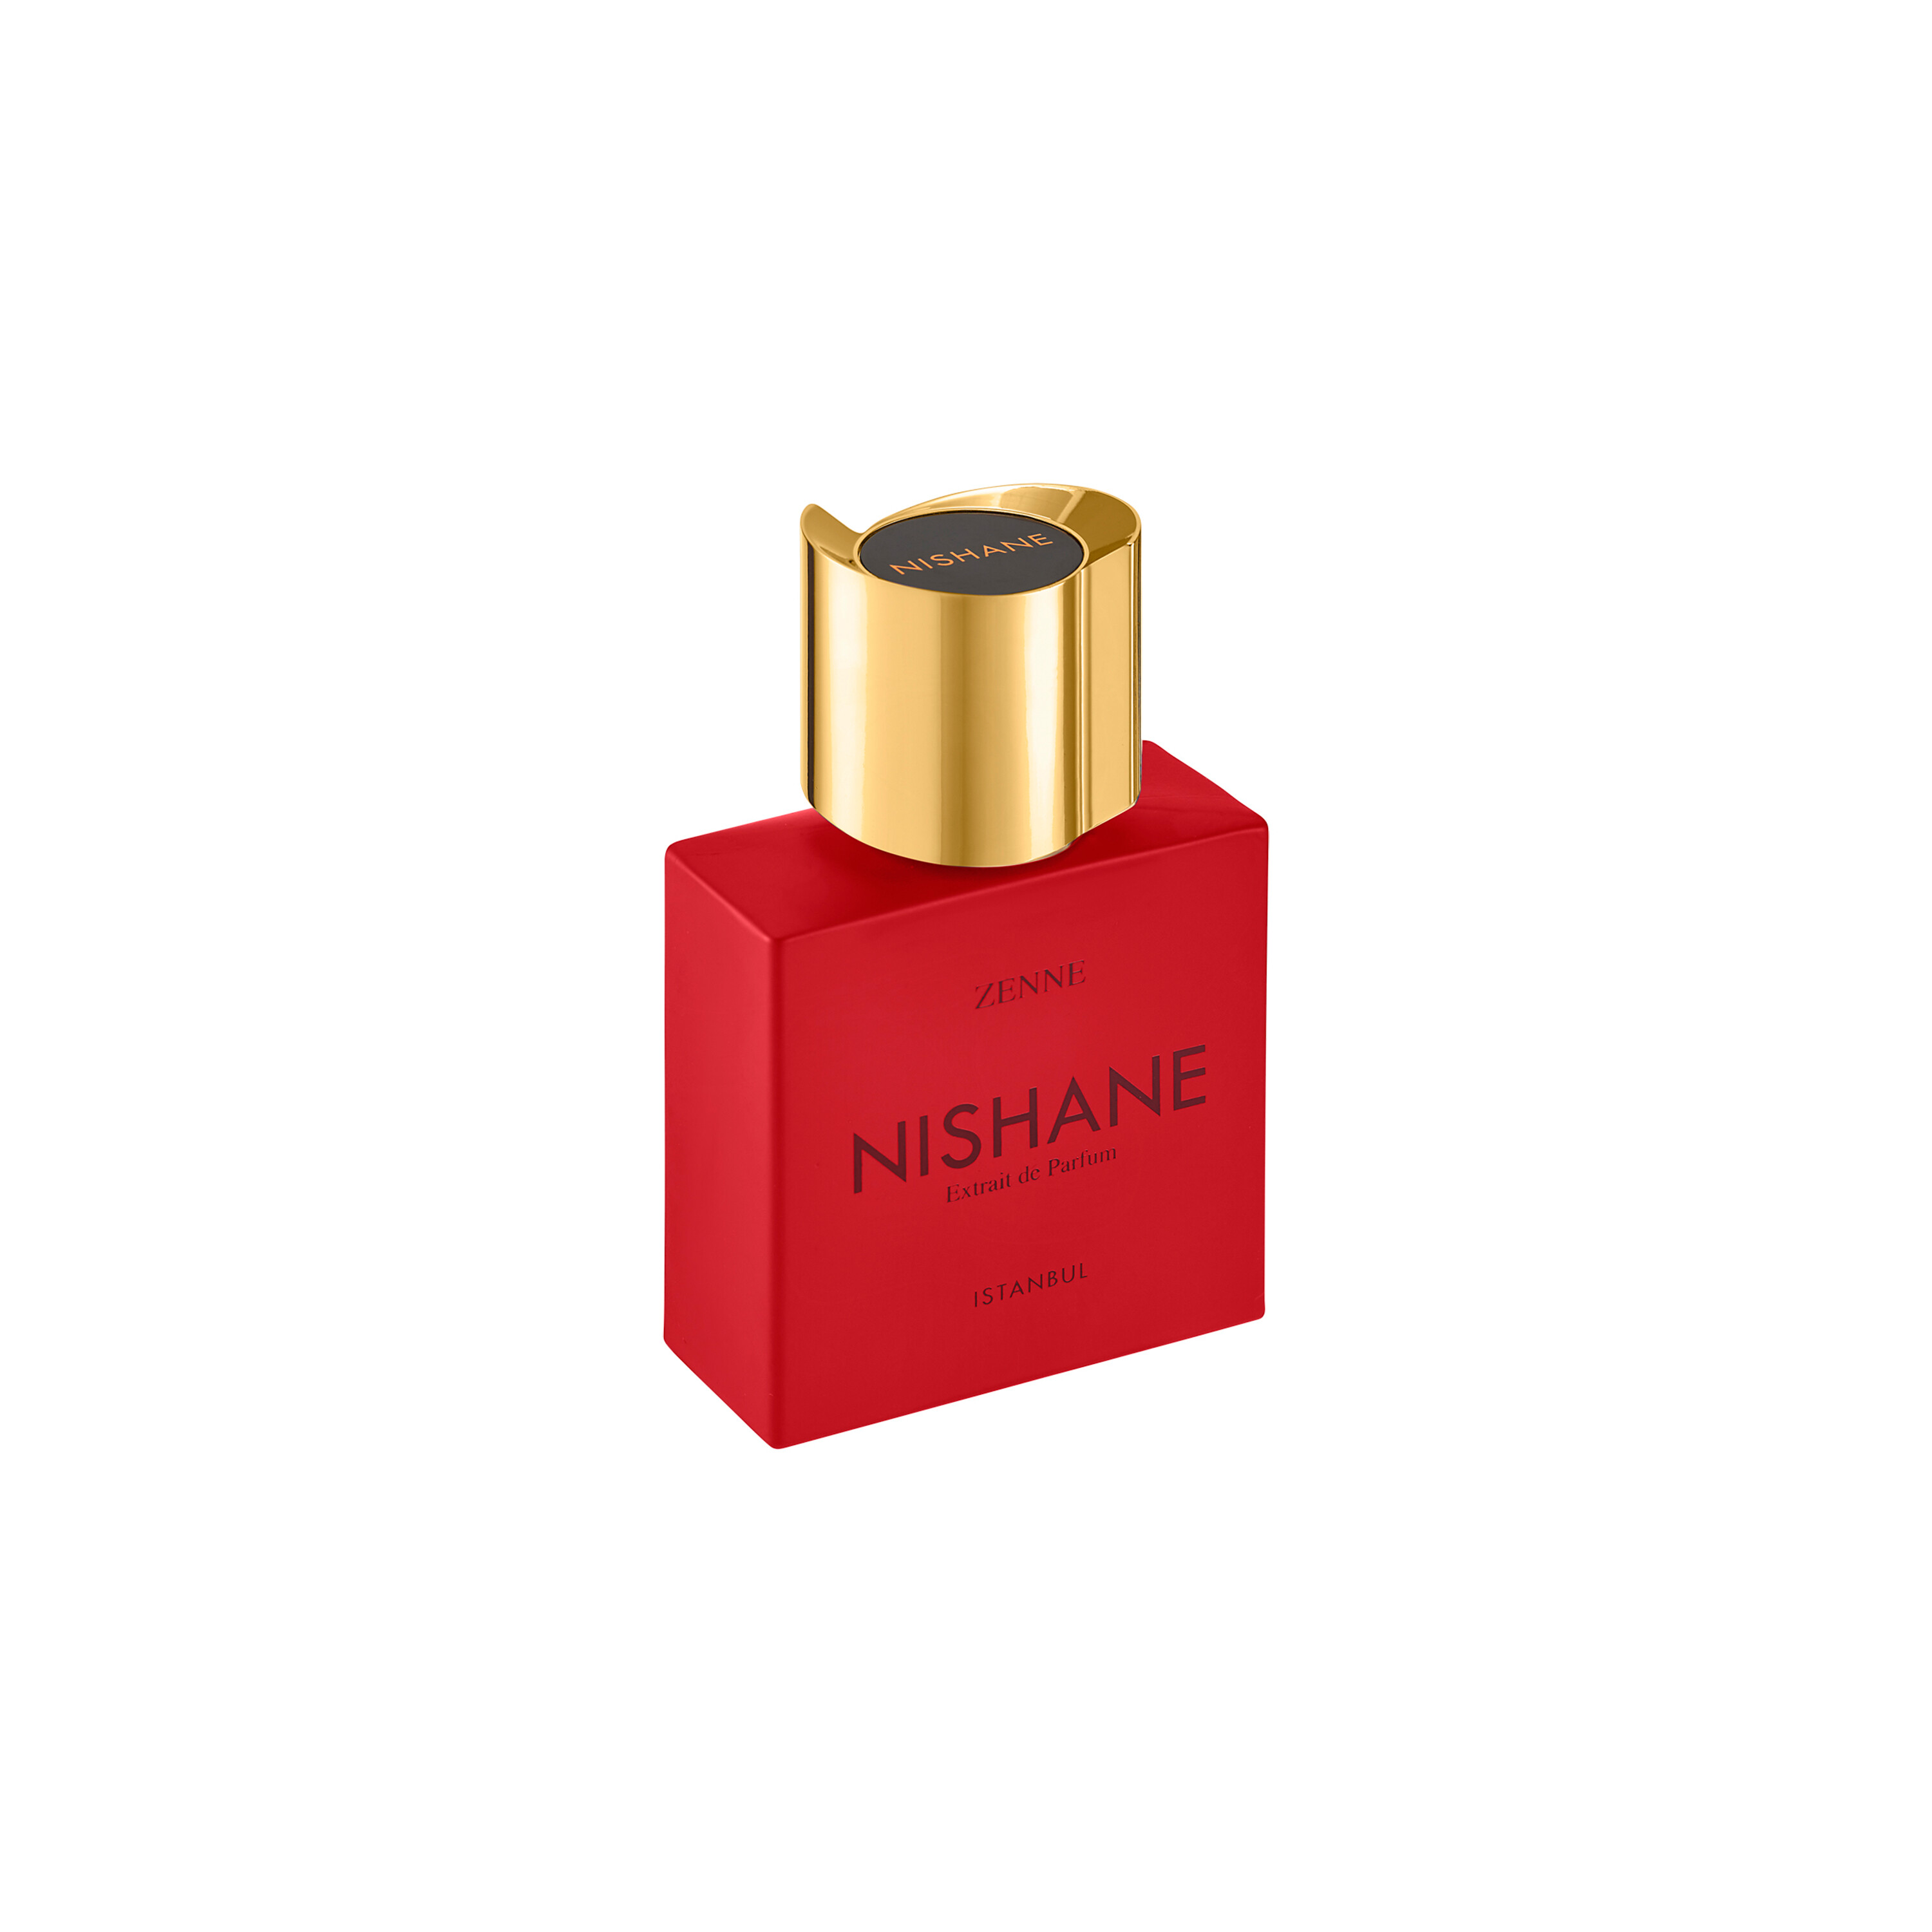 NISHANE Zenne Extrait de Parfum 50ml